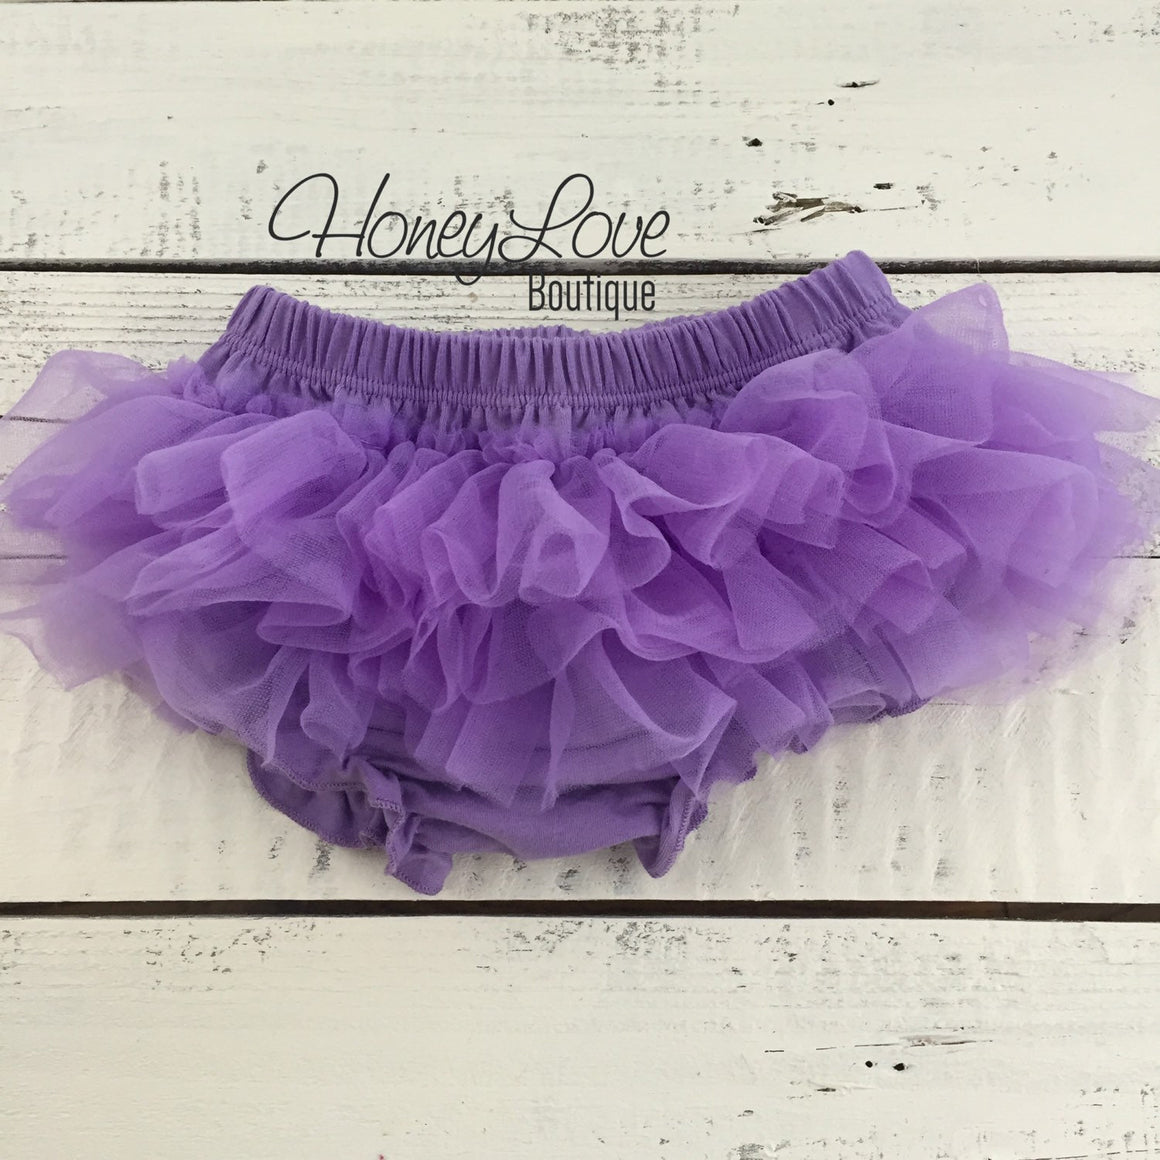 Lavender Purple - Pettiskirt - Tutu Skirt Bloomer - Ruffle Bottom Bloomer - HoneyLoveBoutique